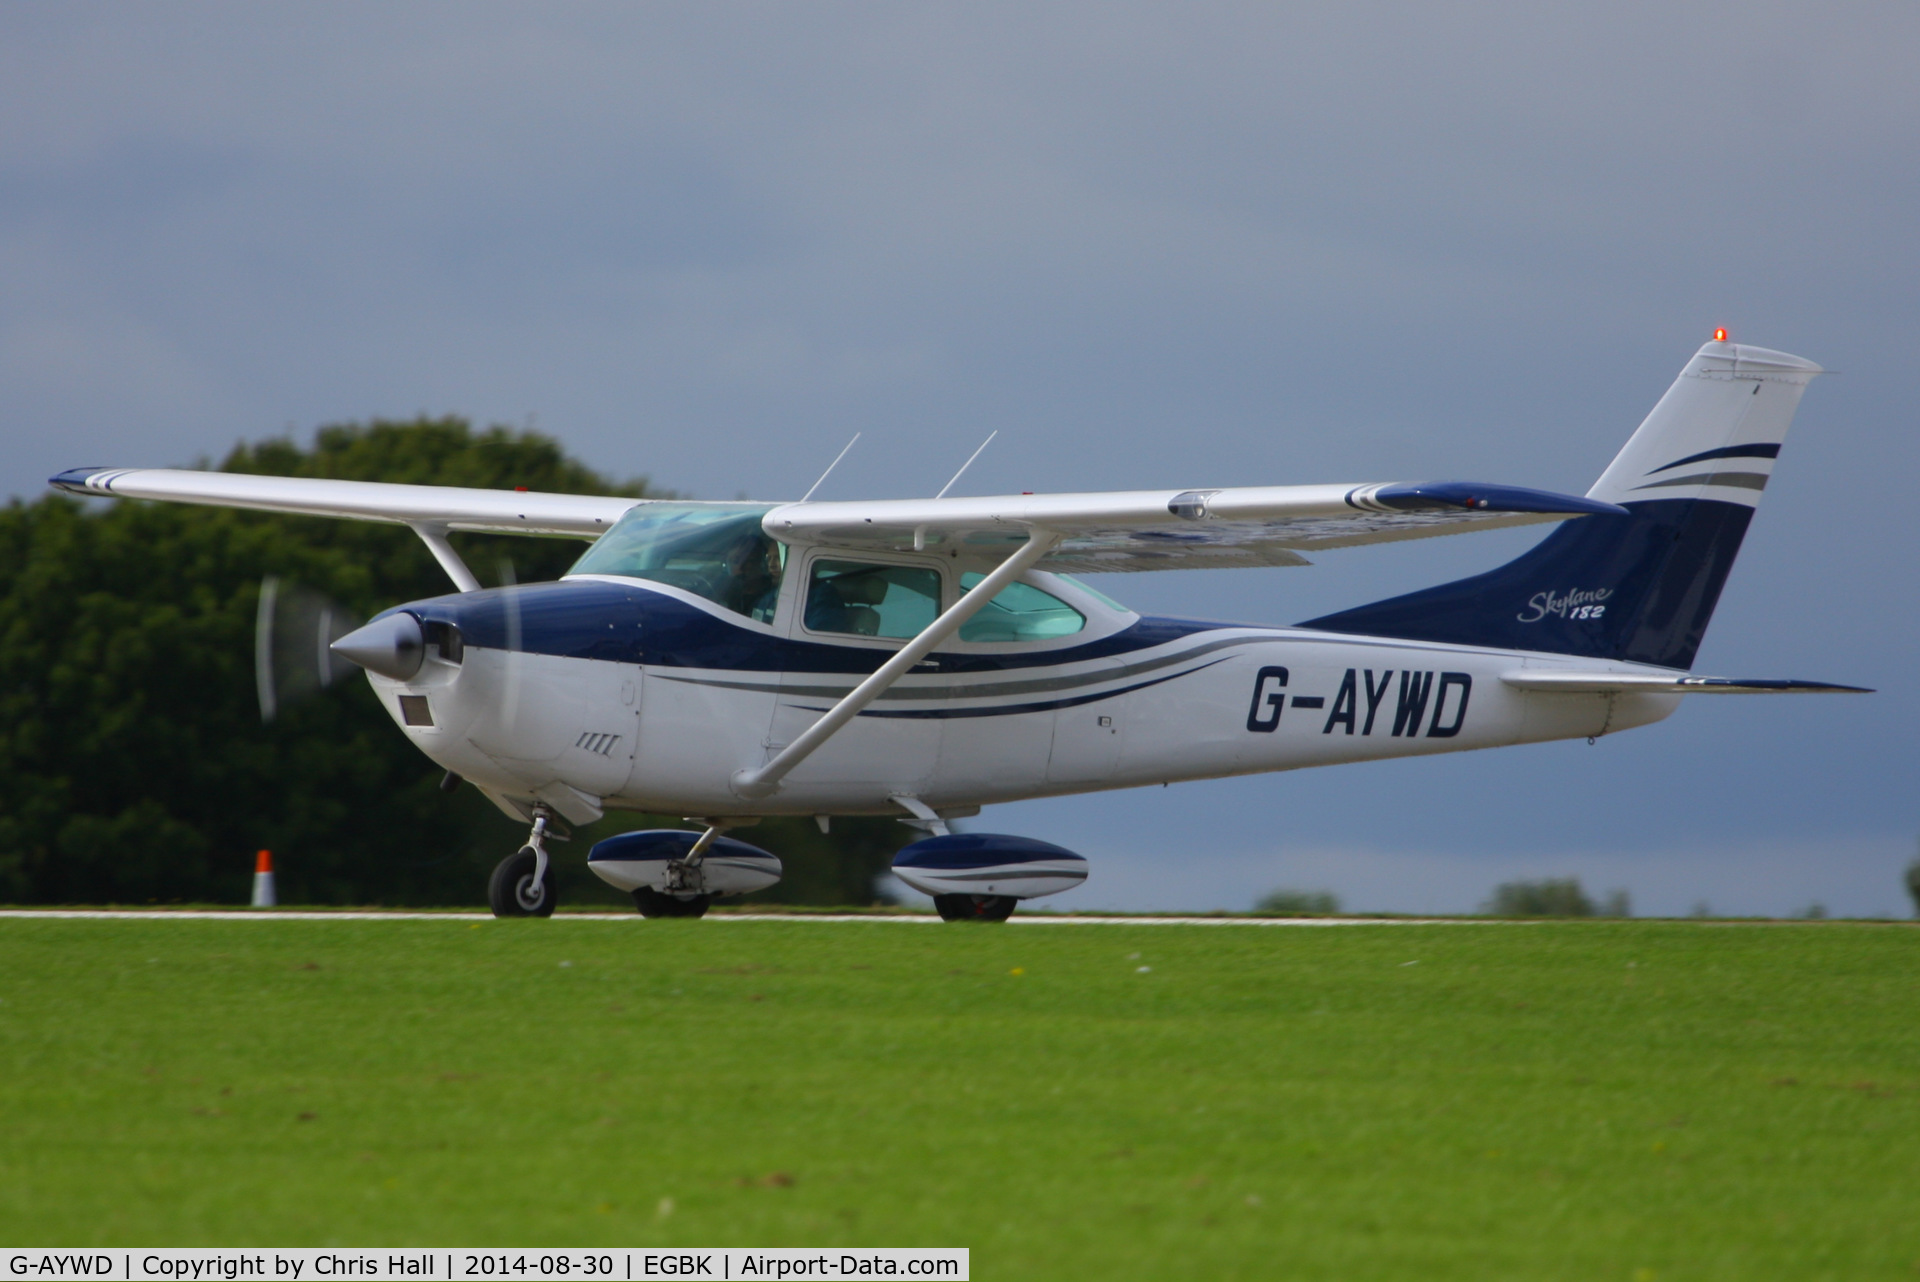 G-AYWD, 1971 Cessna 182N Skylane C/N 182-60468, at the LAA Rally 2014, Sywell